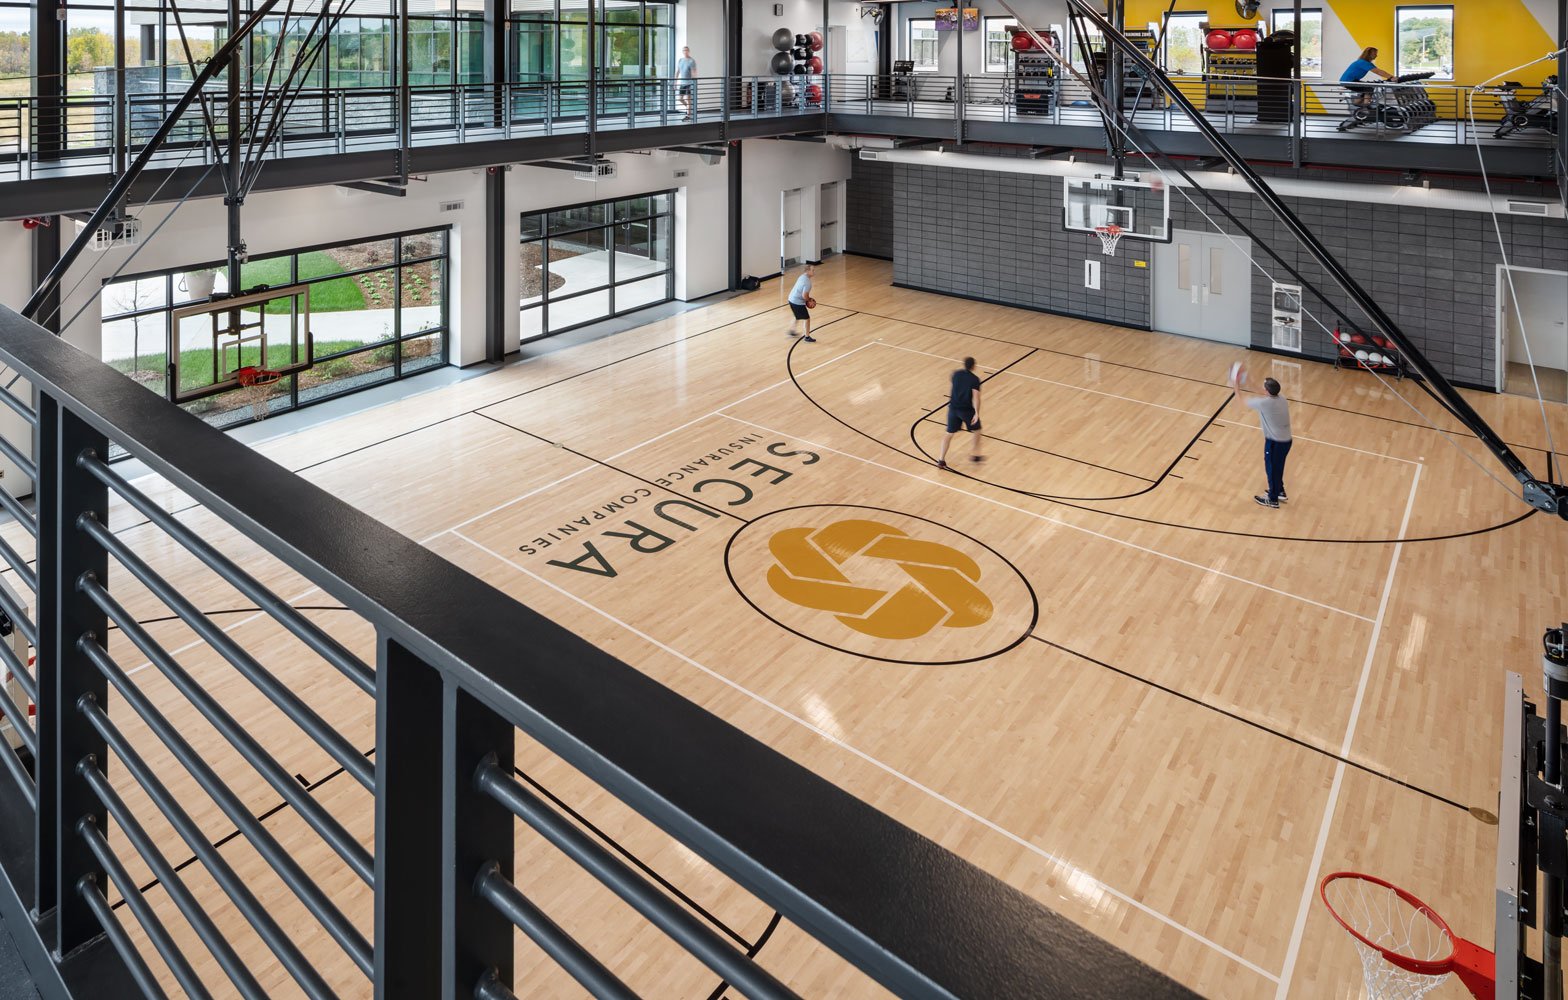 SECURA Insurance Companies Corporate Headquarters' basketball court